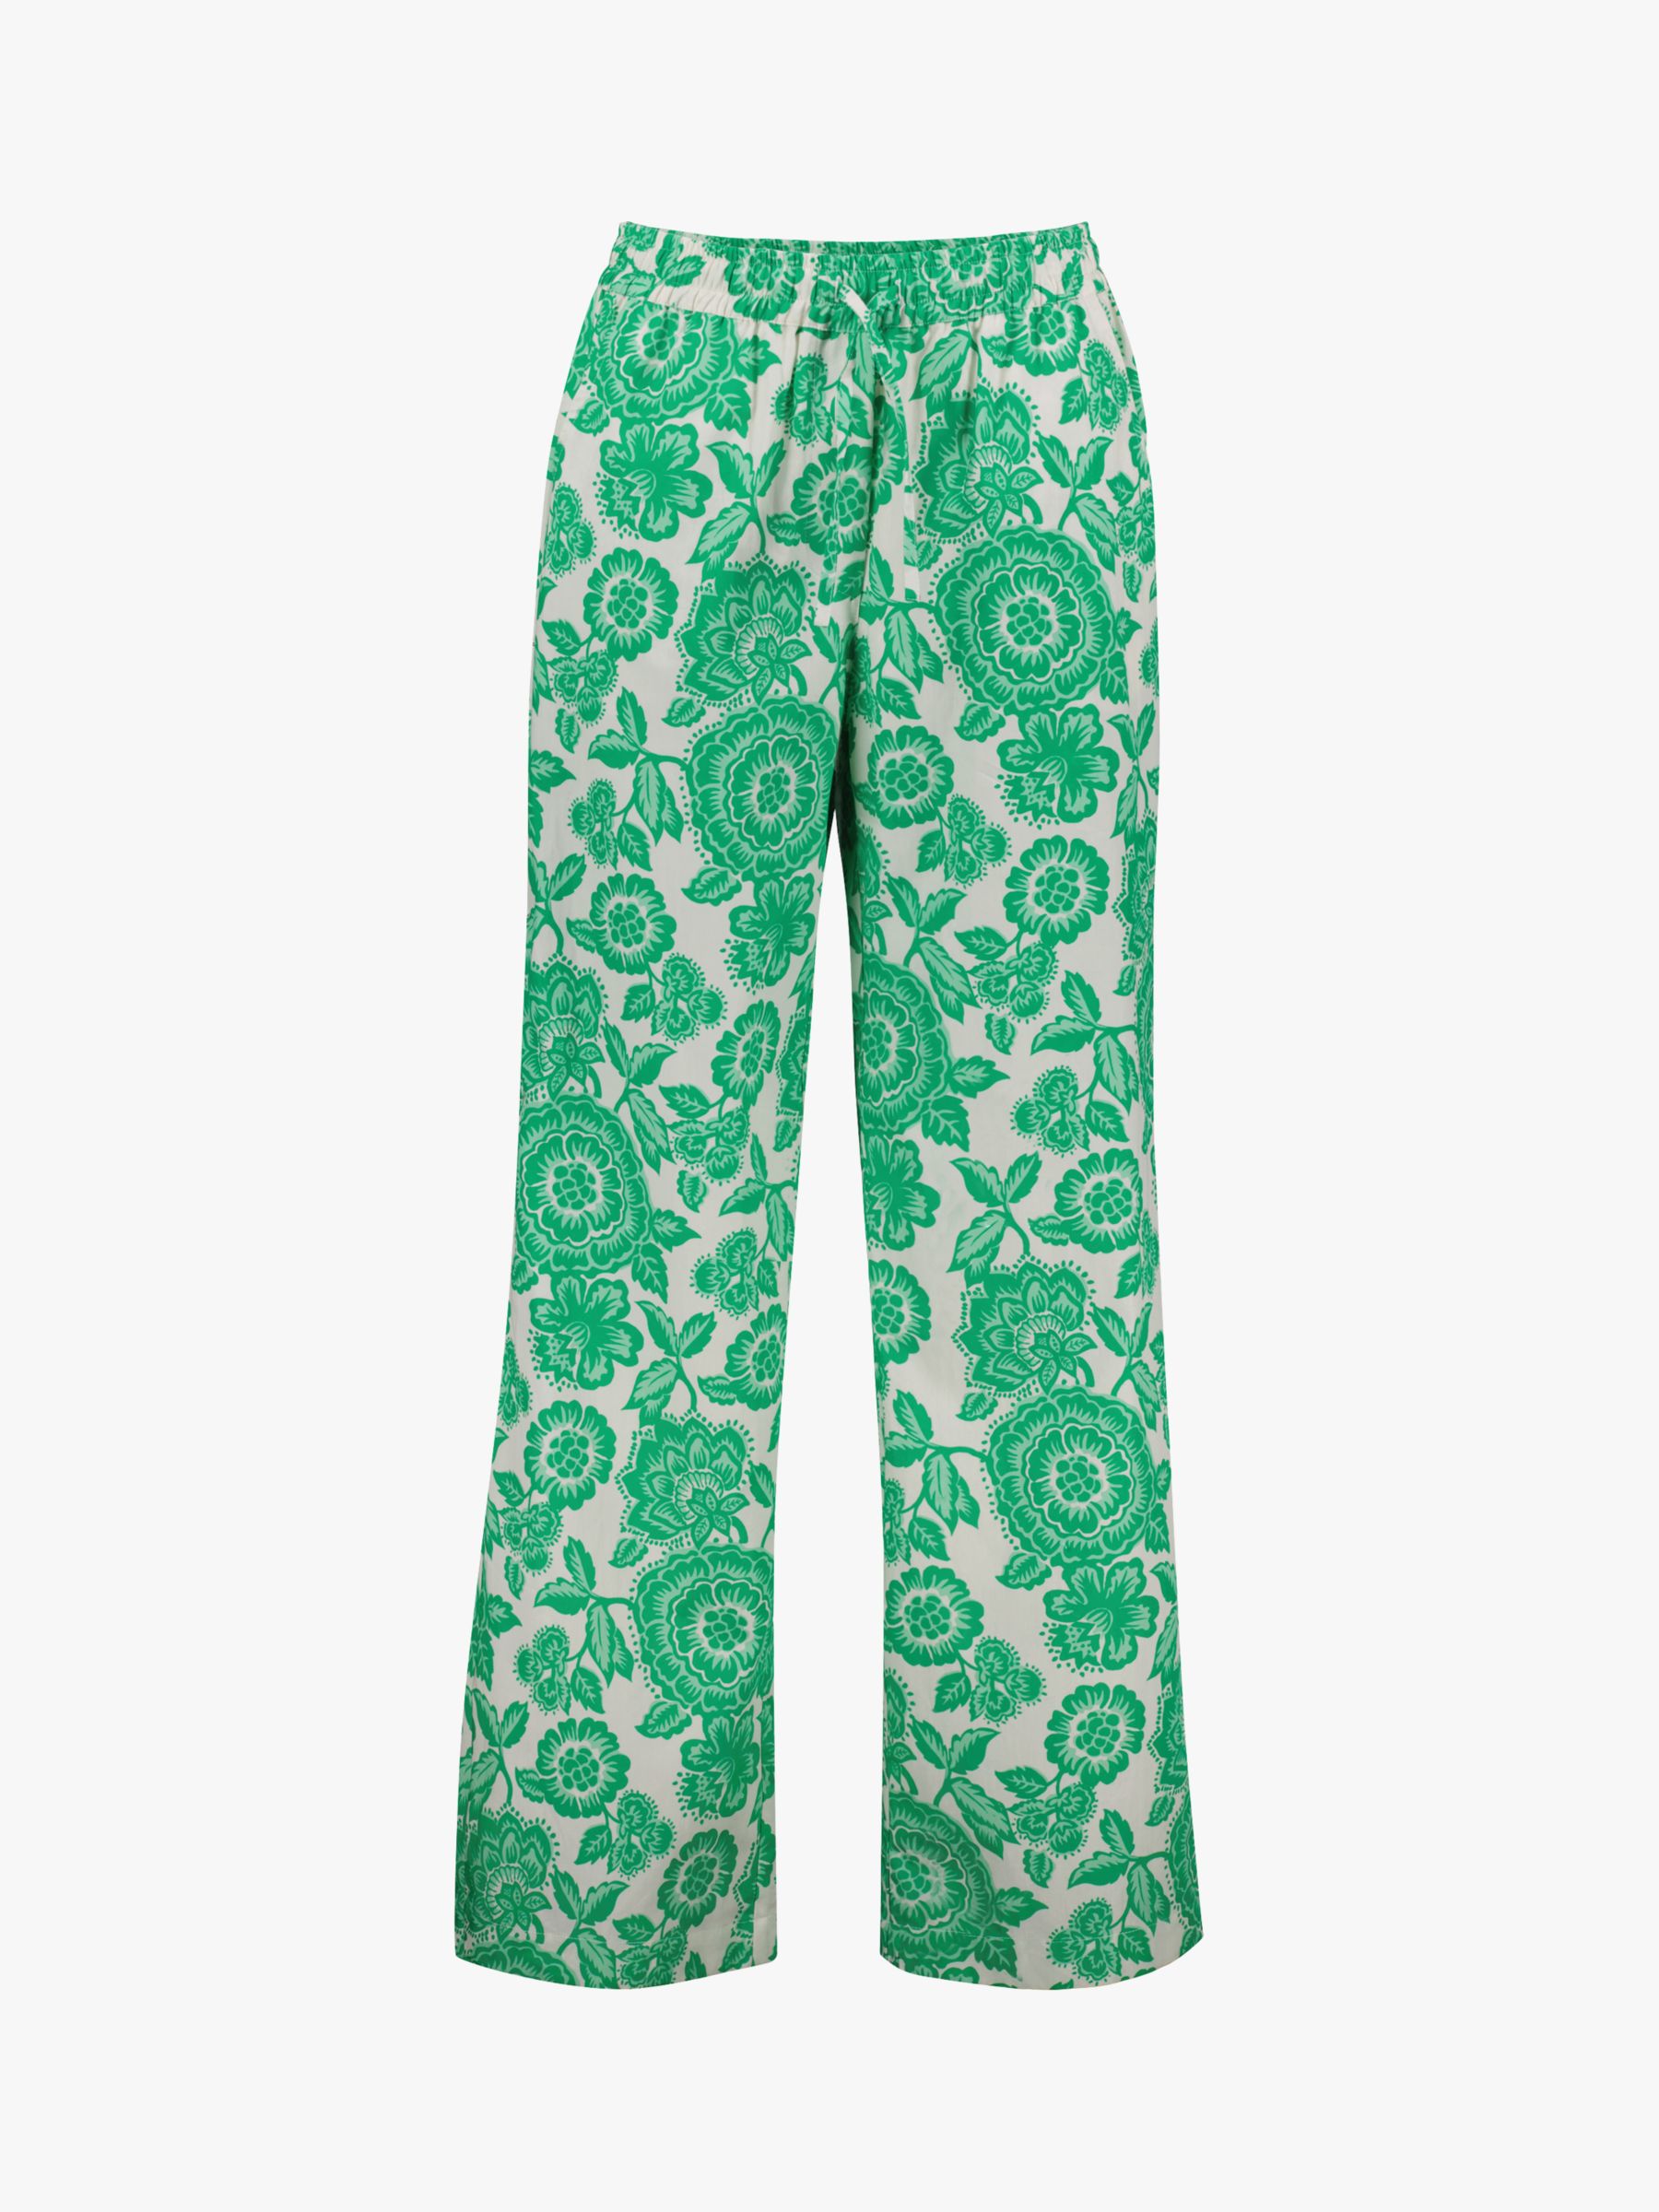 Baukjen Montserrat Organic Cotton Trousers, Green at John Lewis & Partners